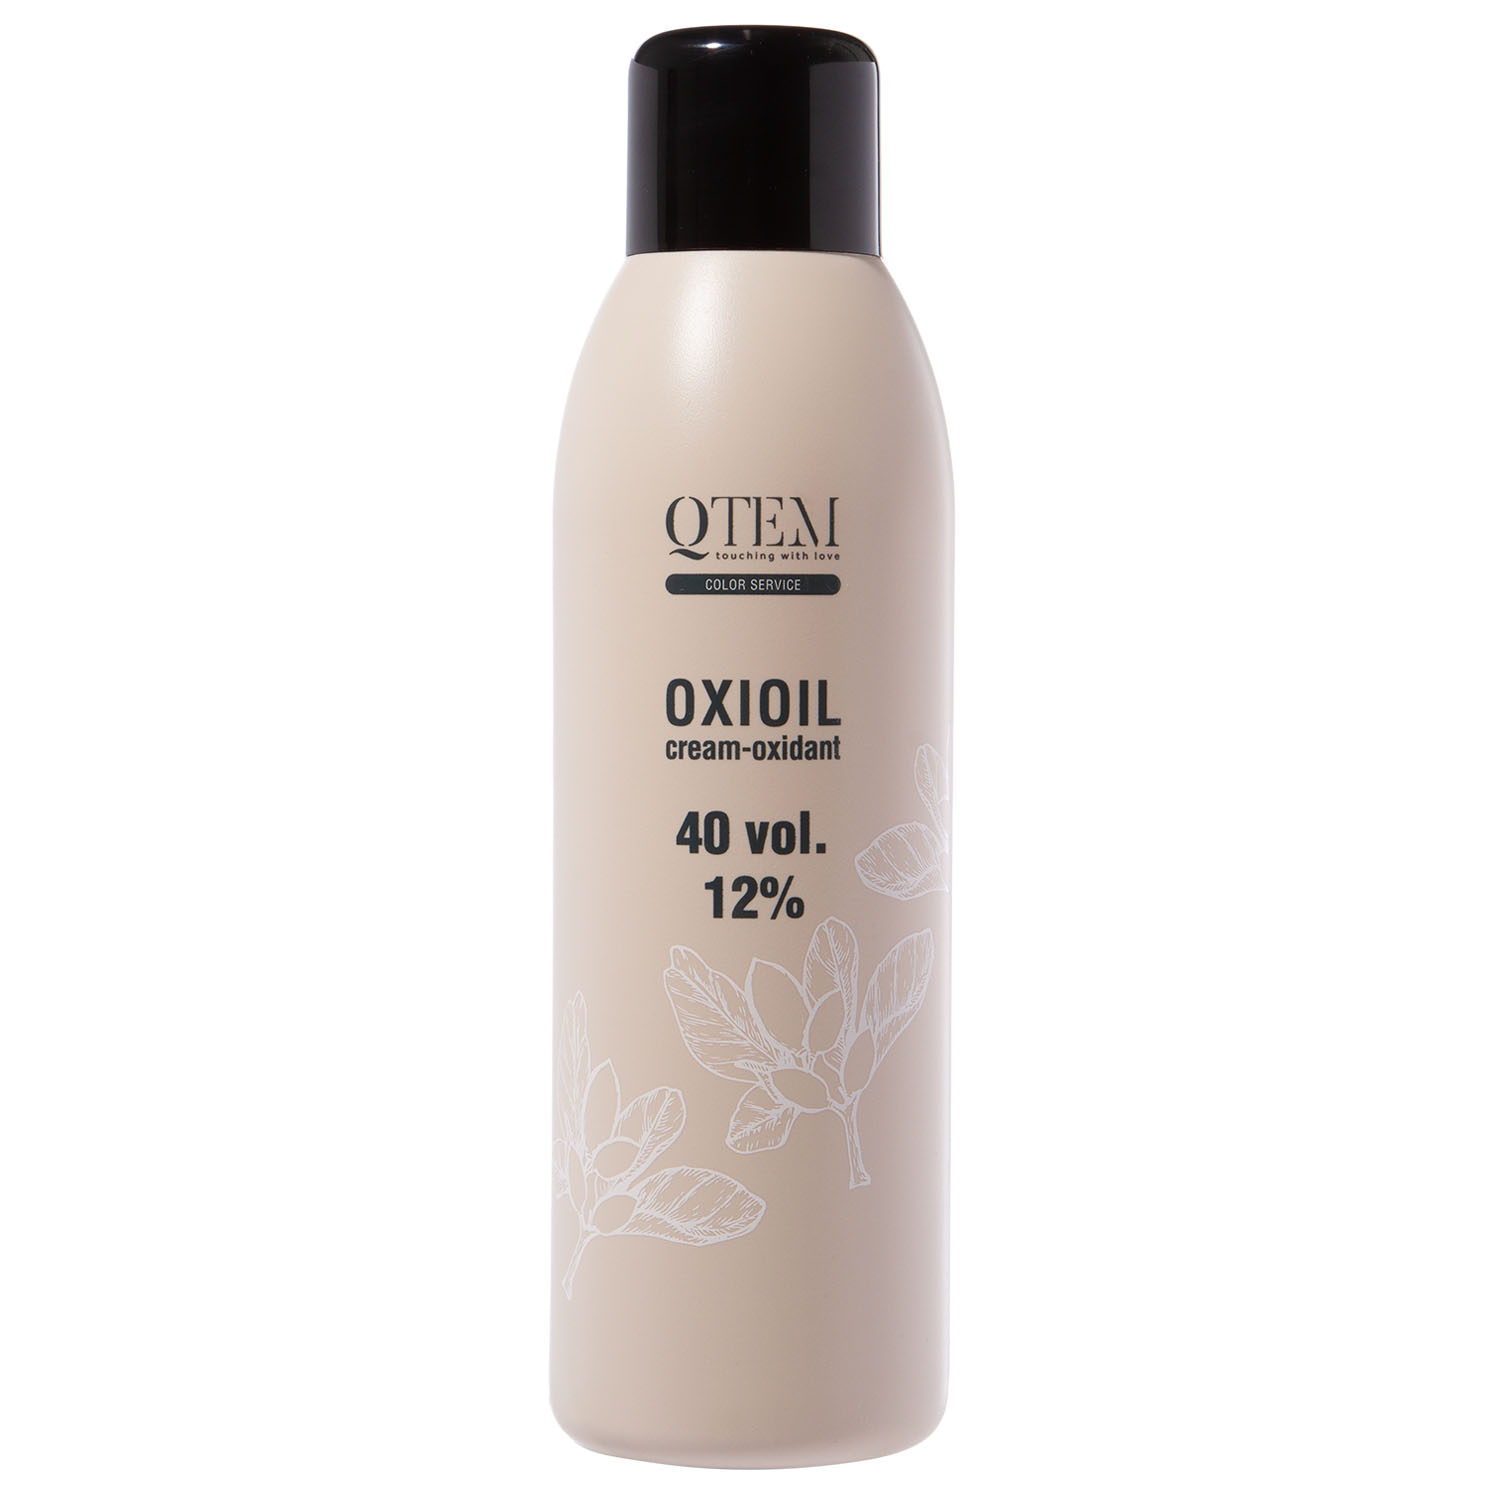 Qtem Универсальный крем-оксидант Oxioil 12% (40 Vol.), 1000 мл (Qtem, Color Service) универсальный крем оксидант qtem oxioil 9% 30 vol 1000 мл